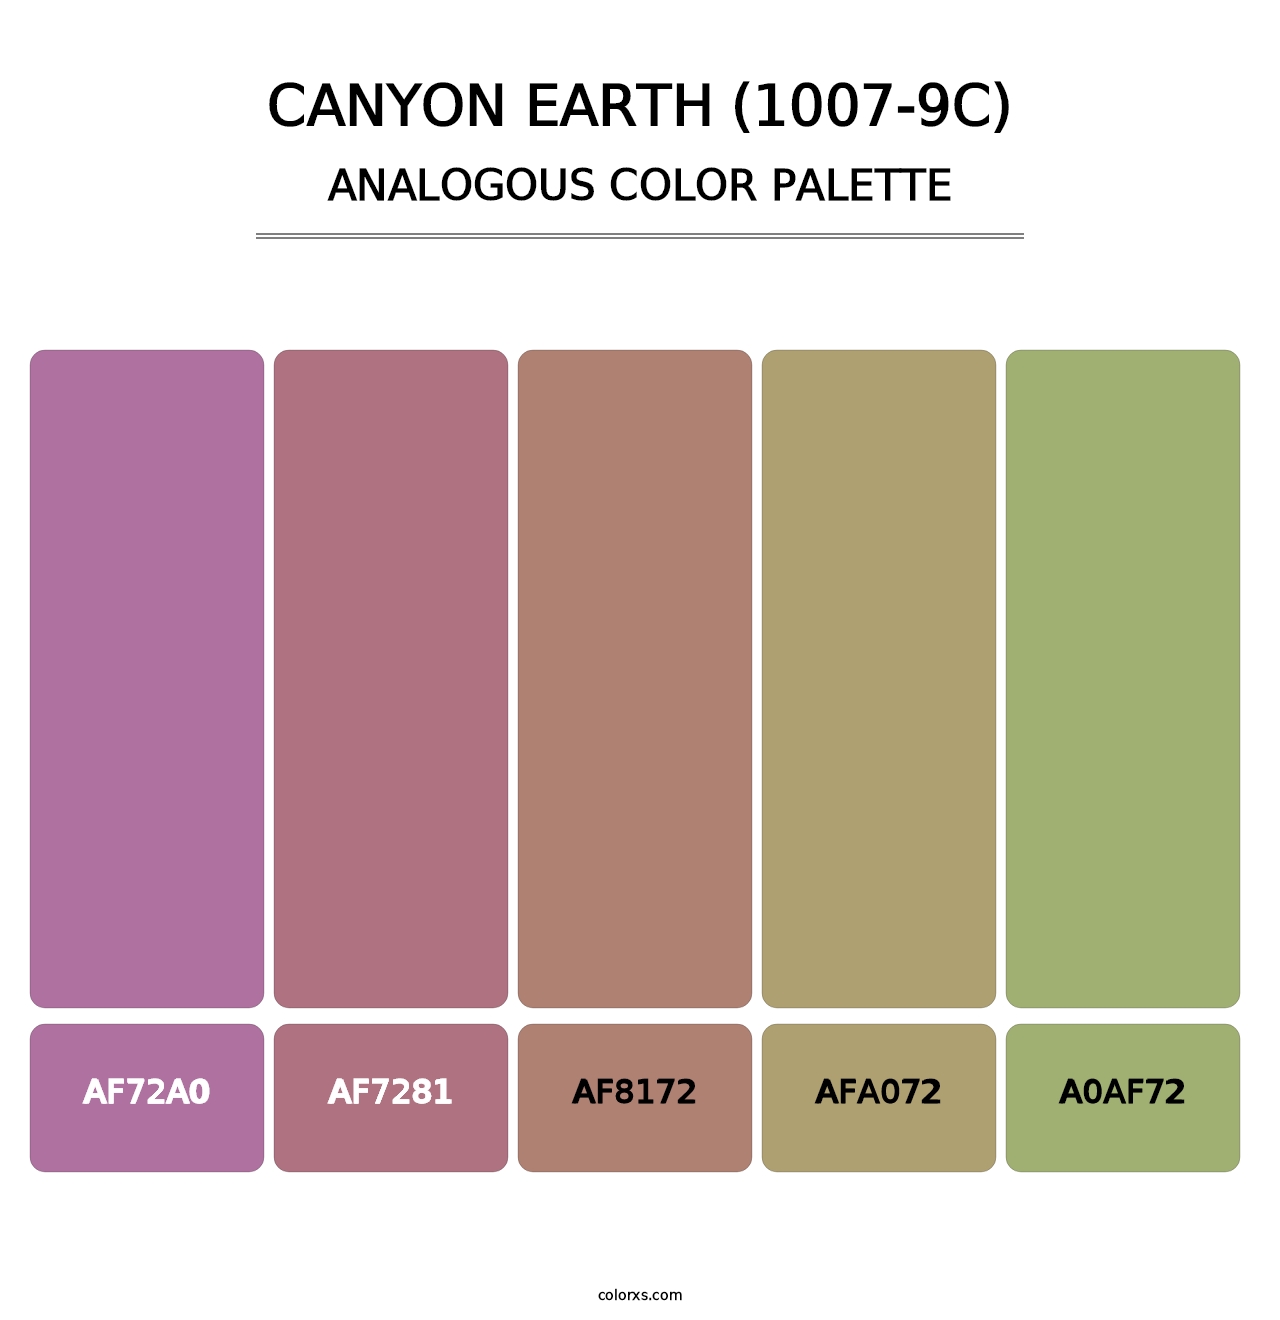 Canyon Earth (1007-9C) - Analogous Color Palette